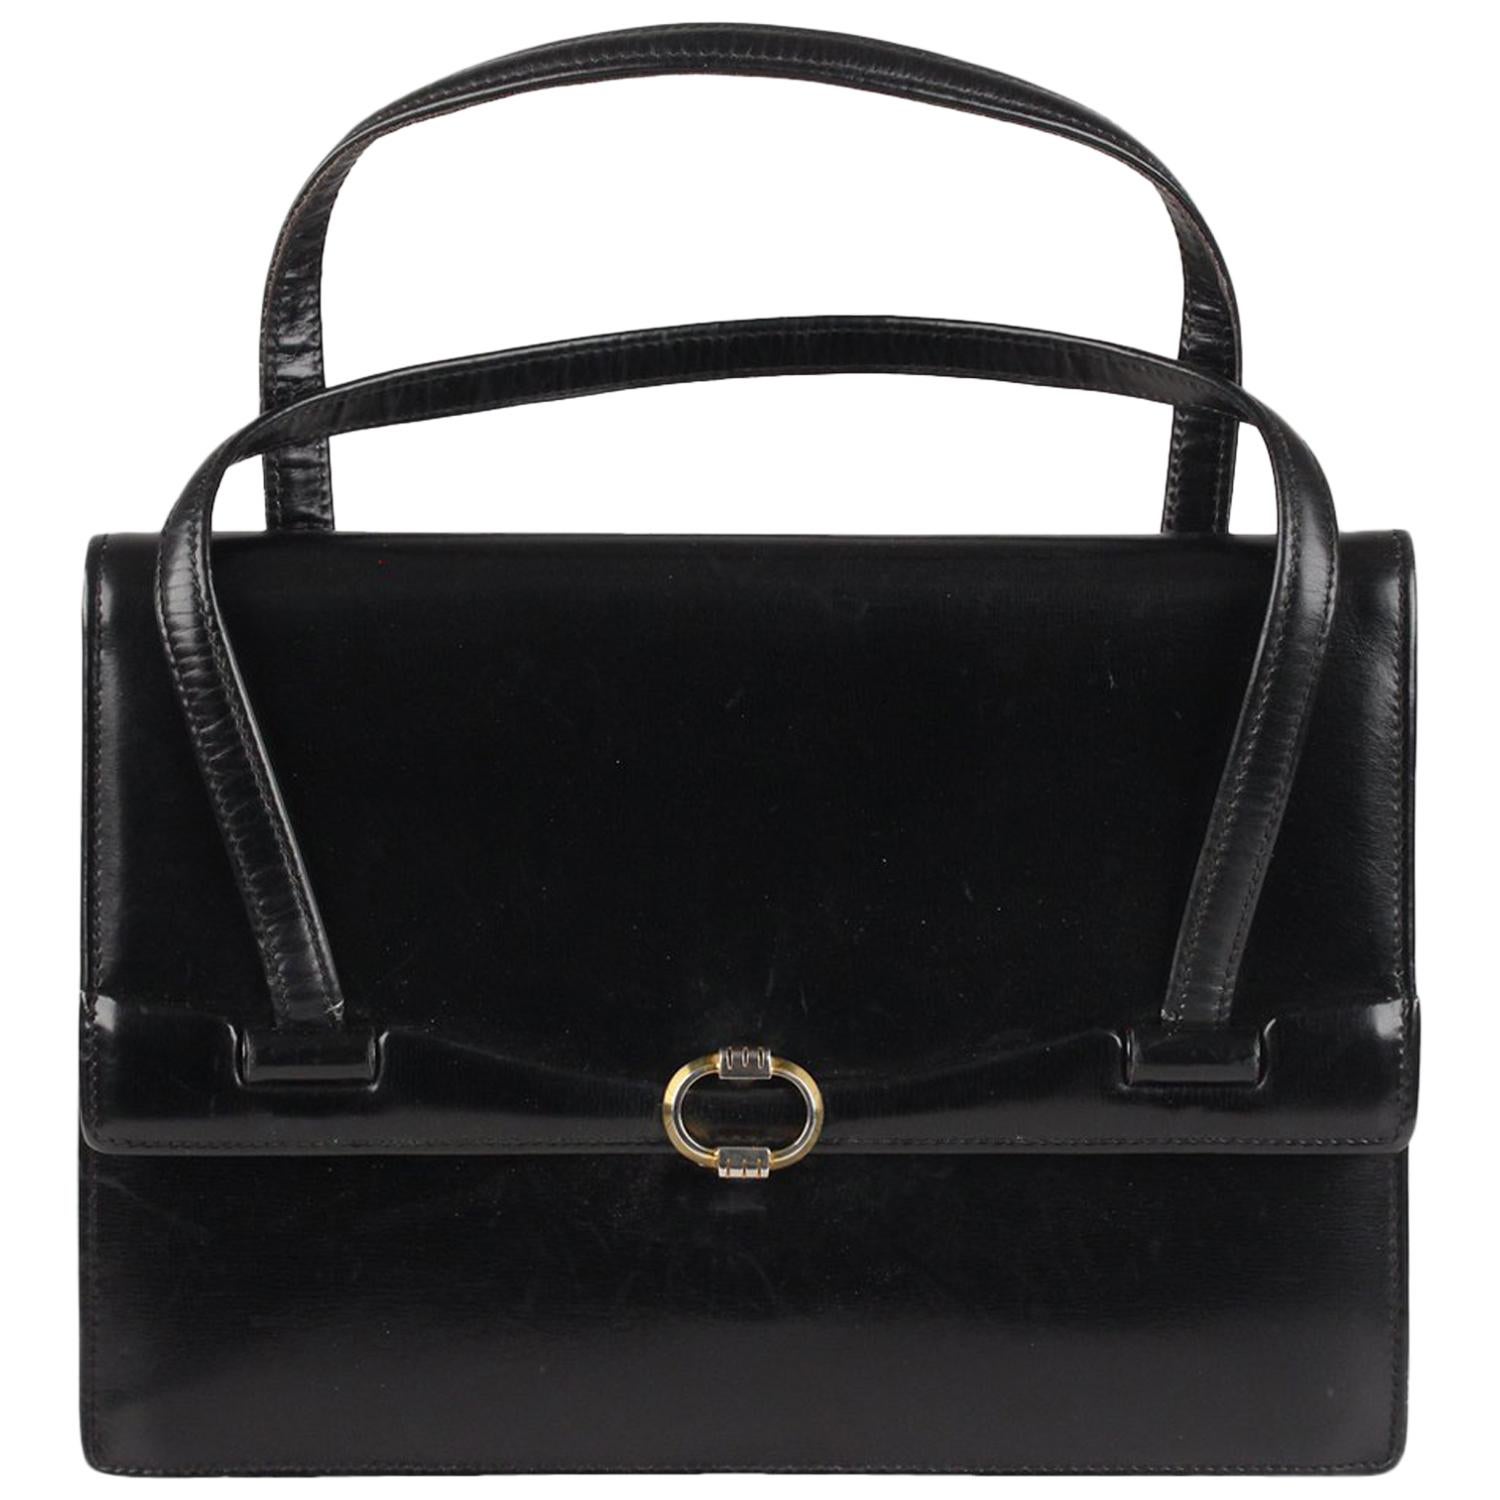 Gucci Vintage Black Leather Handbag Top Handle Bag Purse